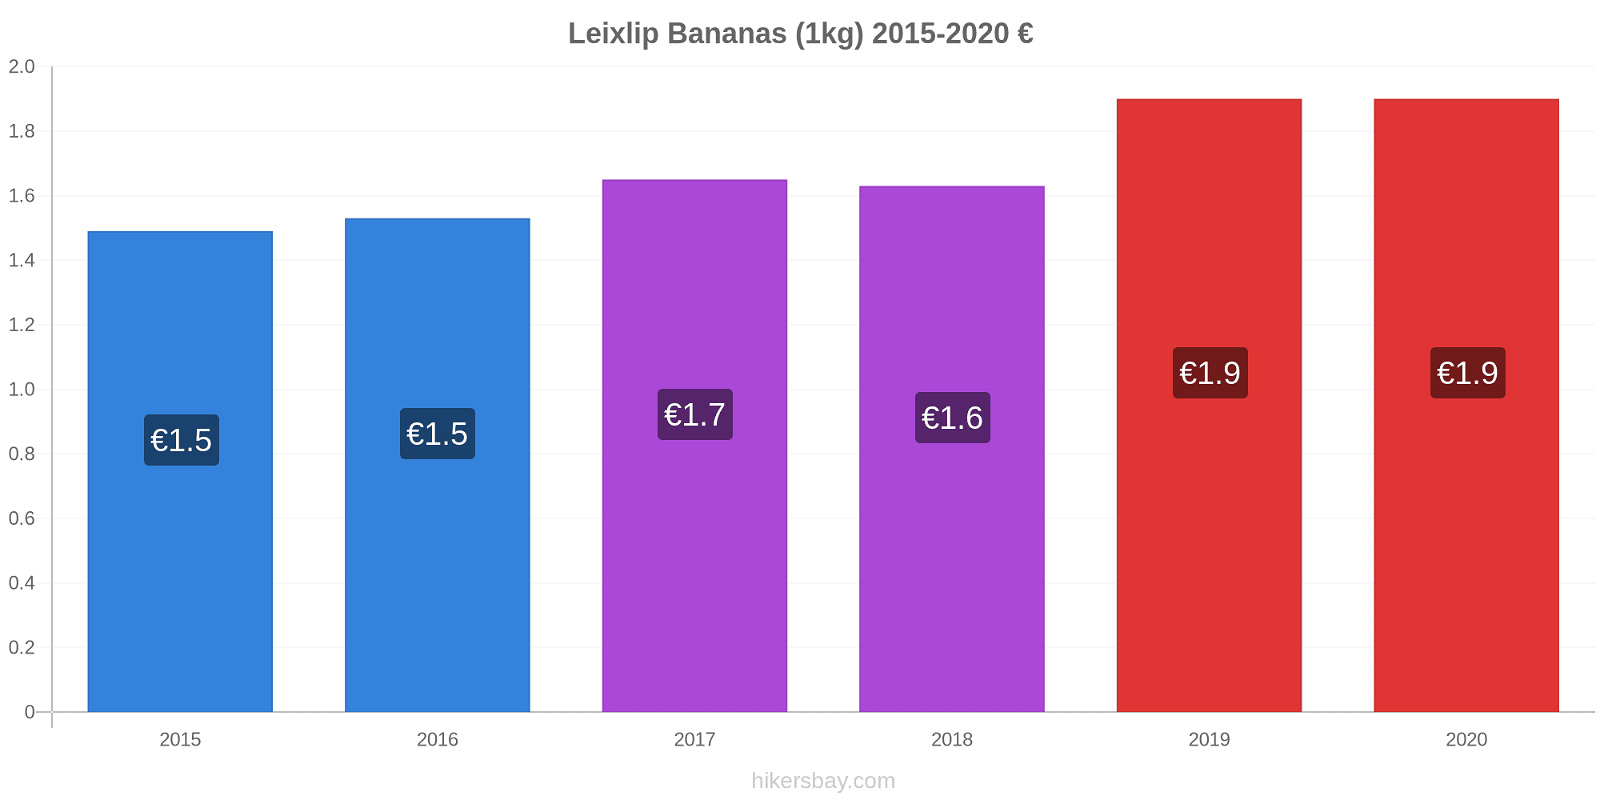 Leixlip price changes Bananas (1kg) hikersbay.com